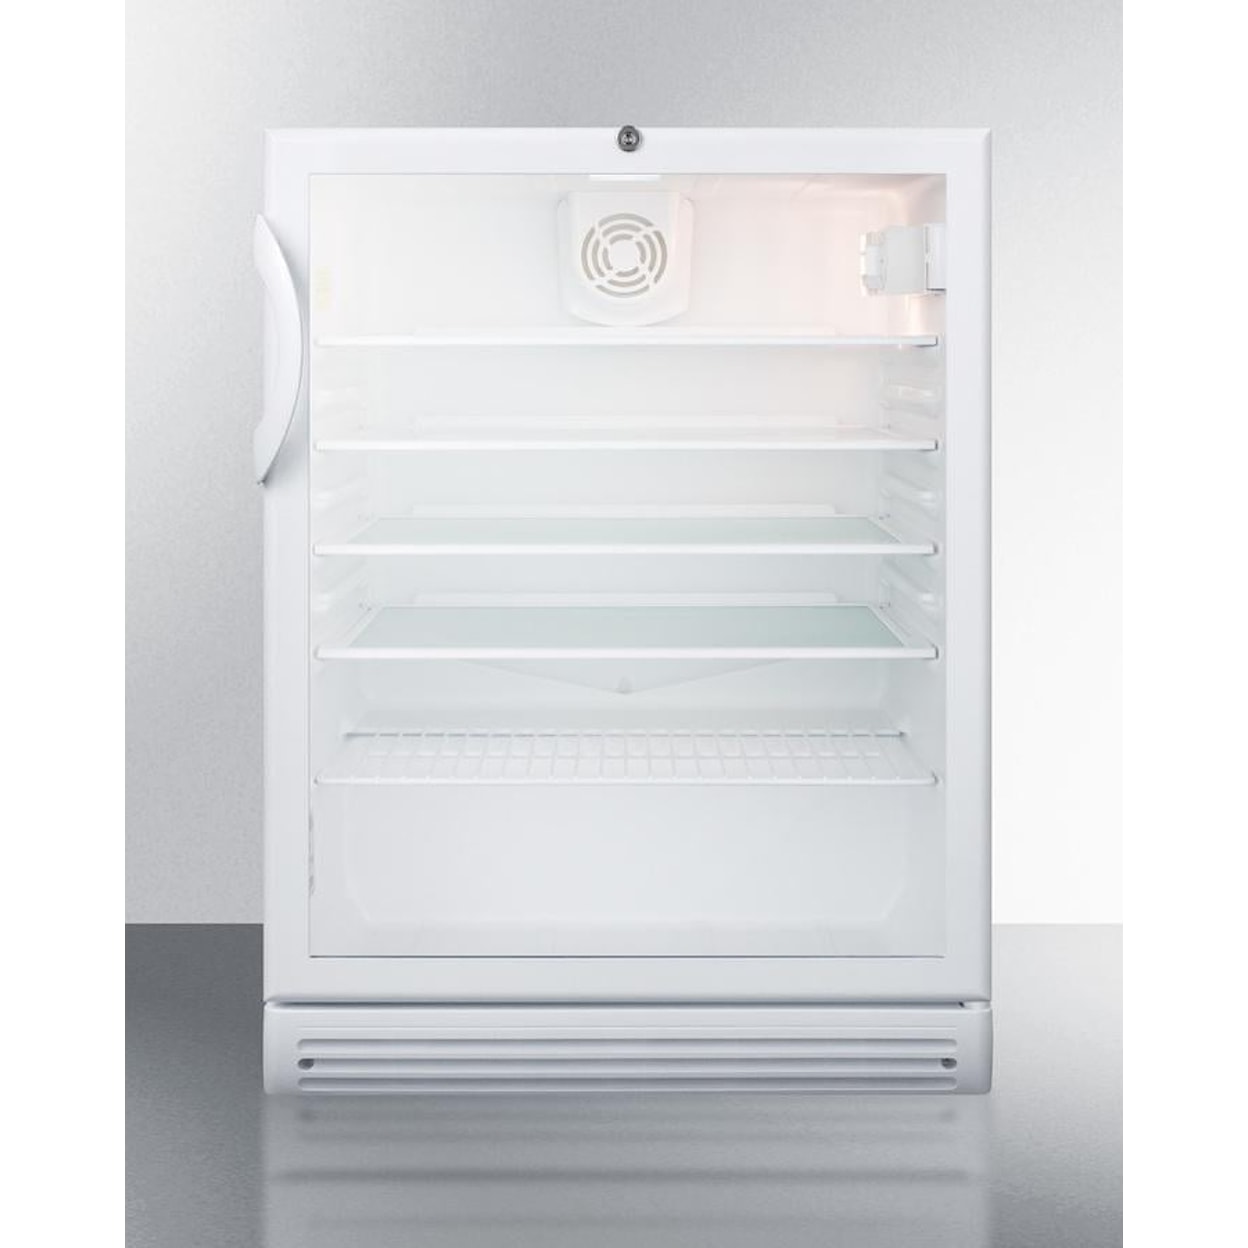 Summit Refrigerators Specialty Refrigerator